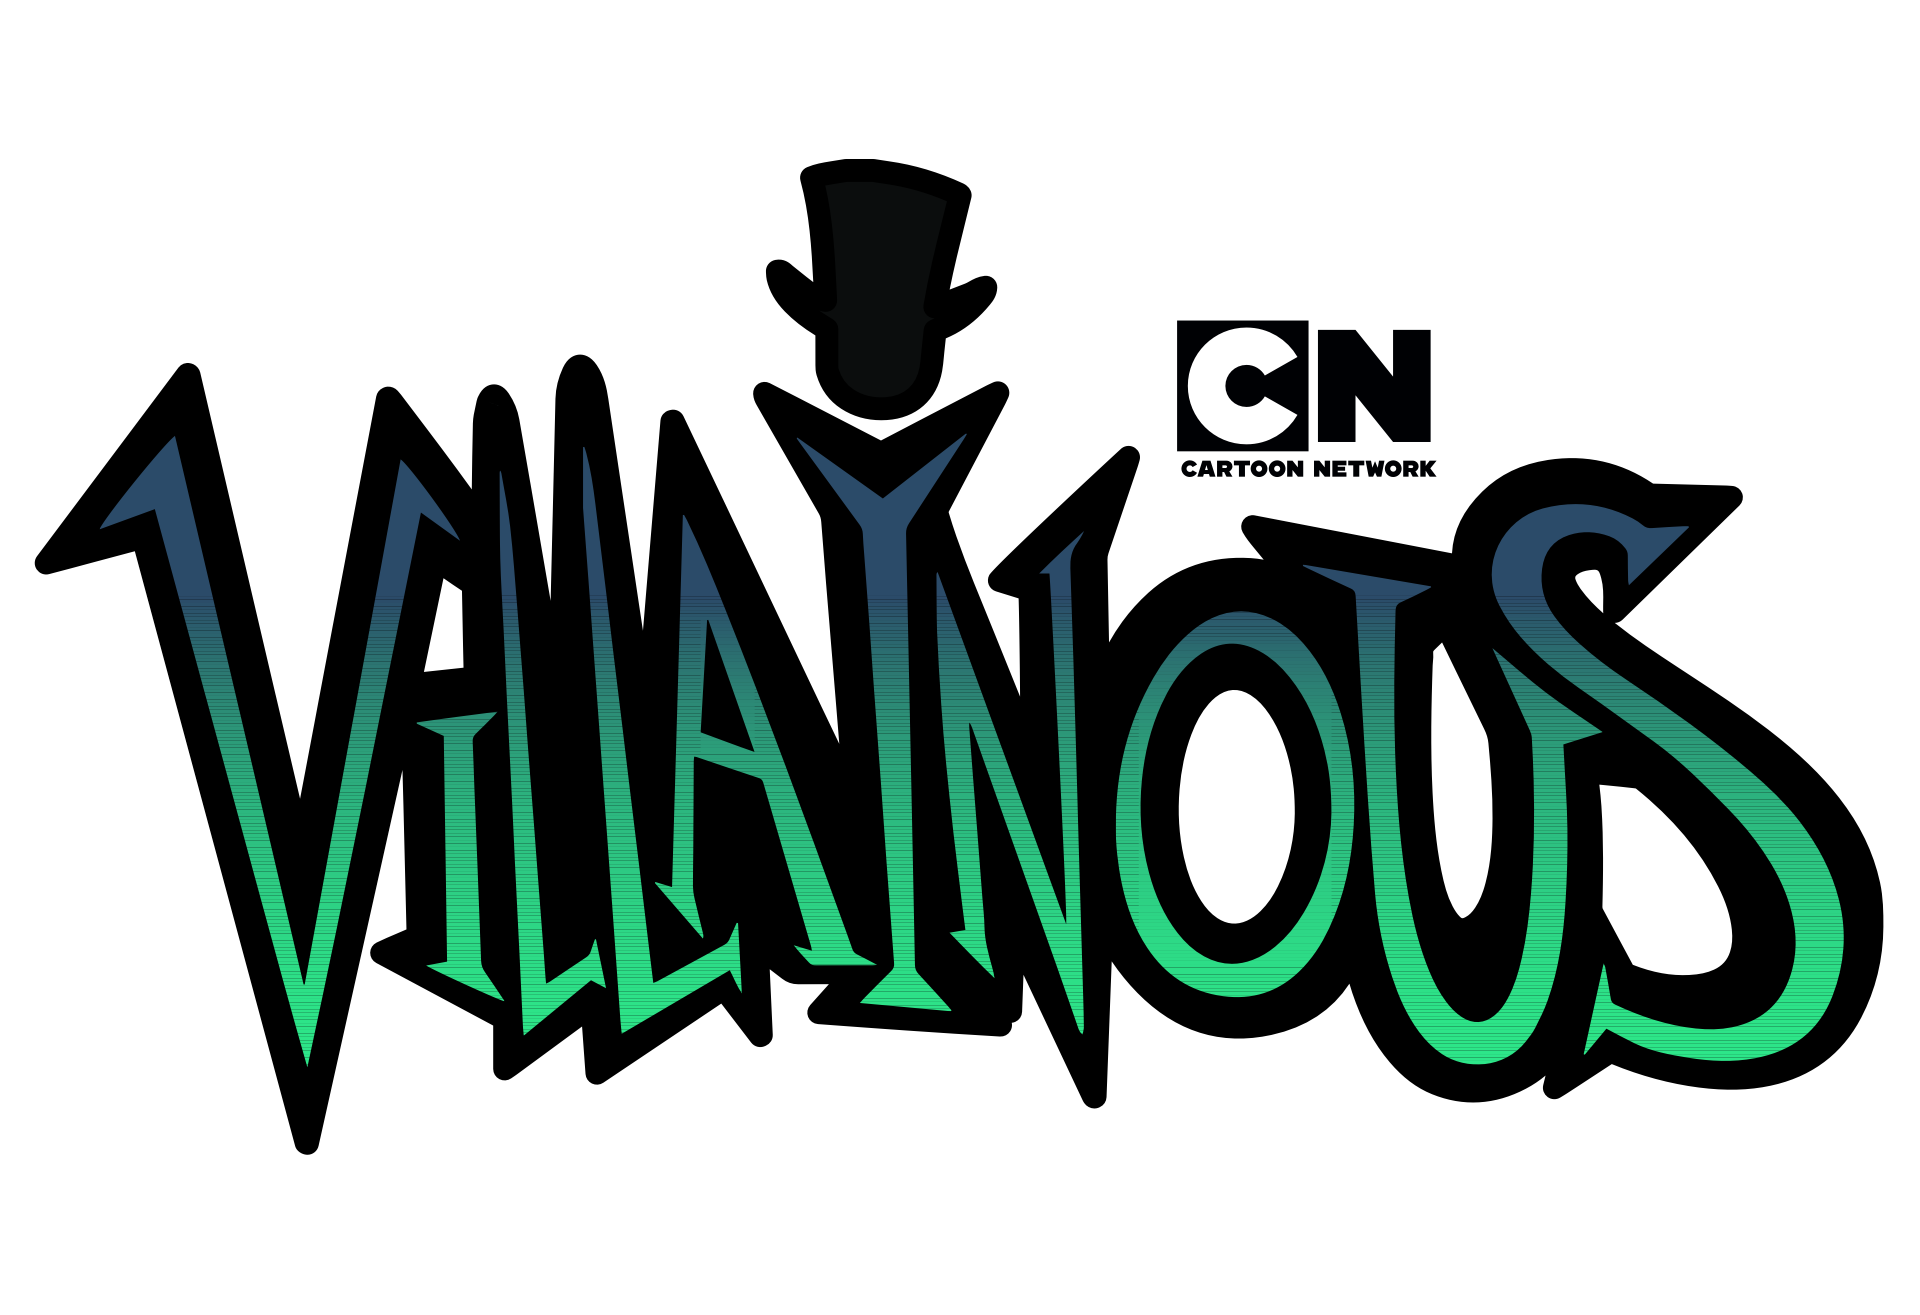 HD CN Cartoon Network Logo Transparent Background in 2023